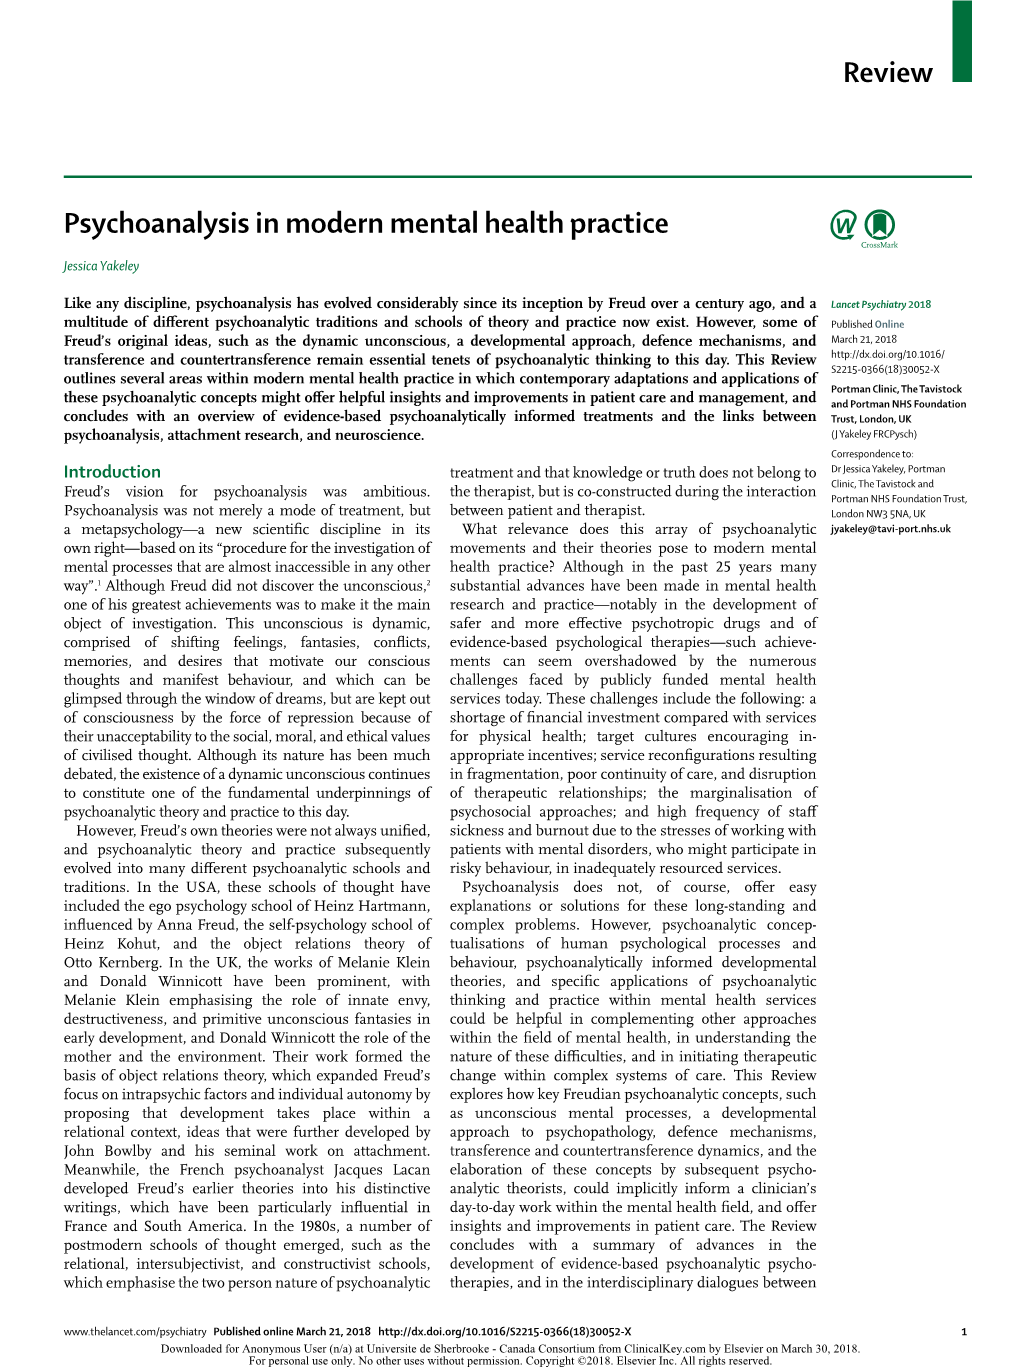 Psychoanalysis in Modern Mental Health Practice